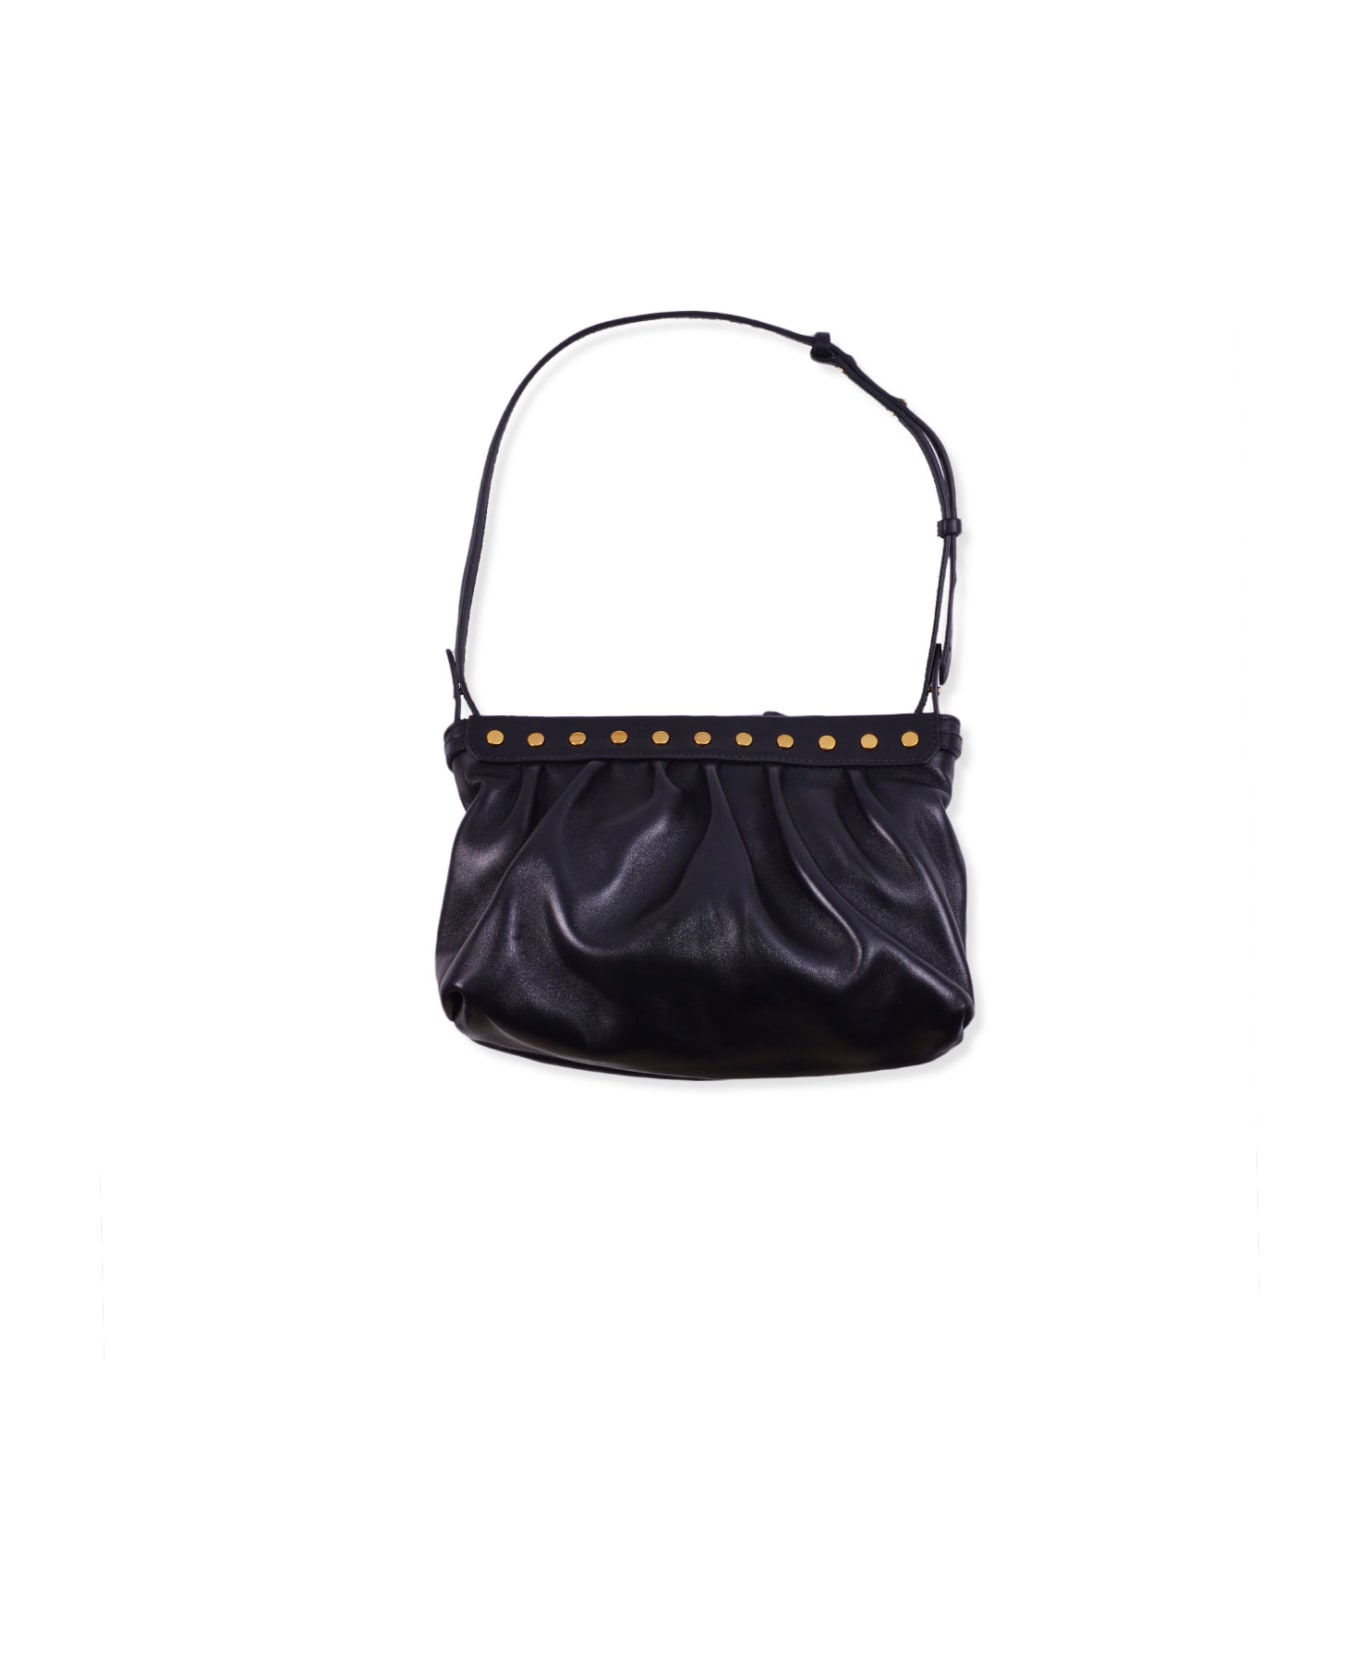 Isabel Marant Handbag - Black/Gold